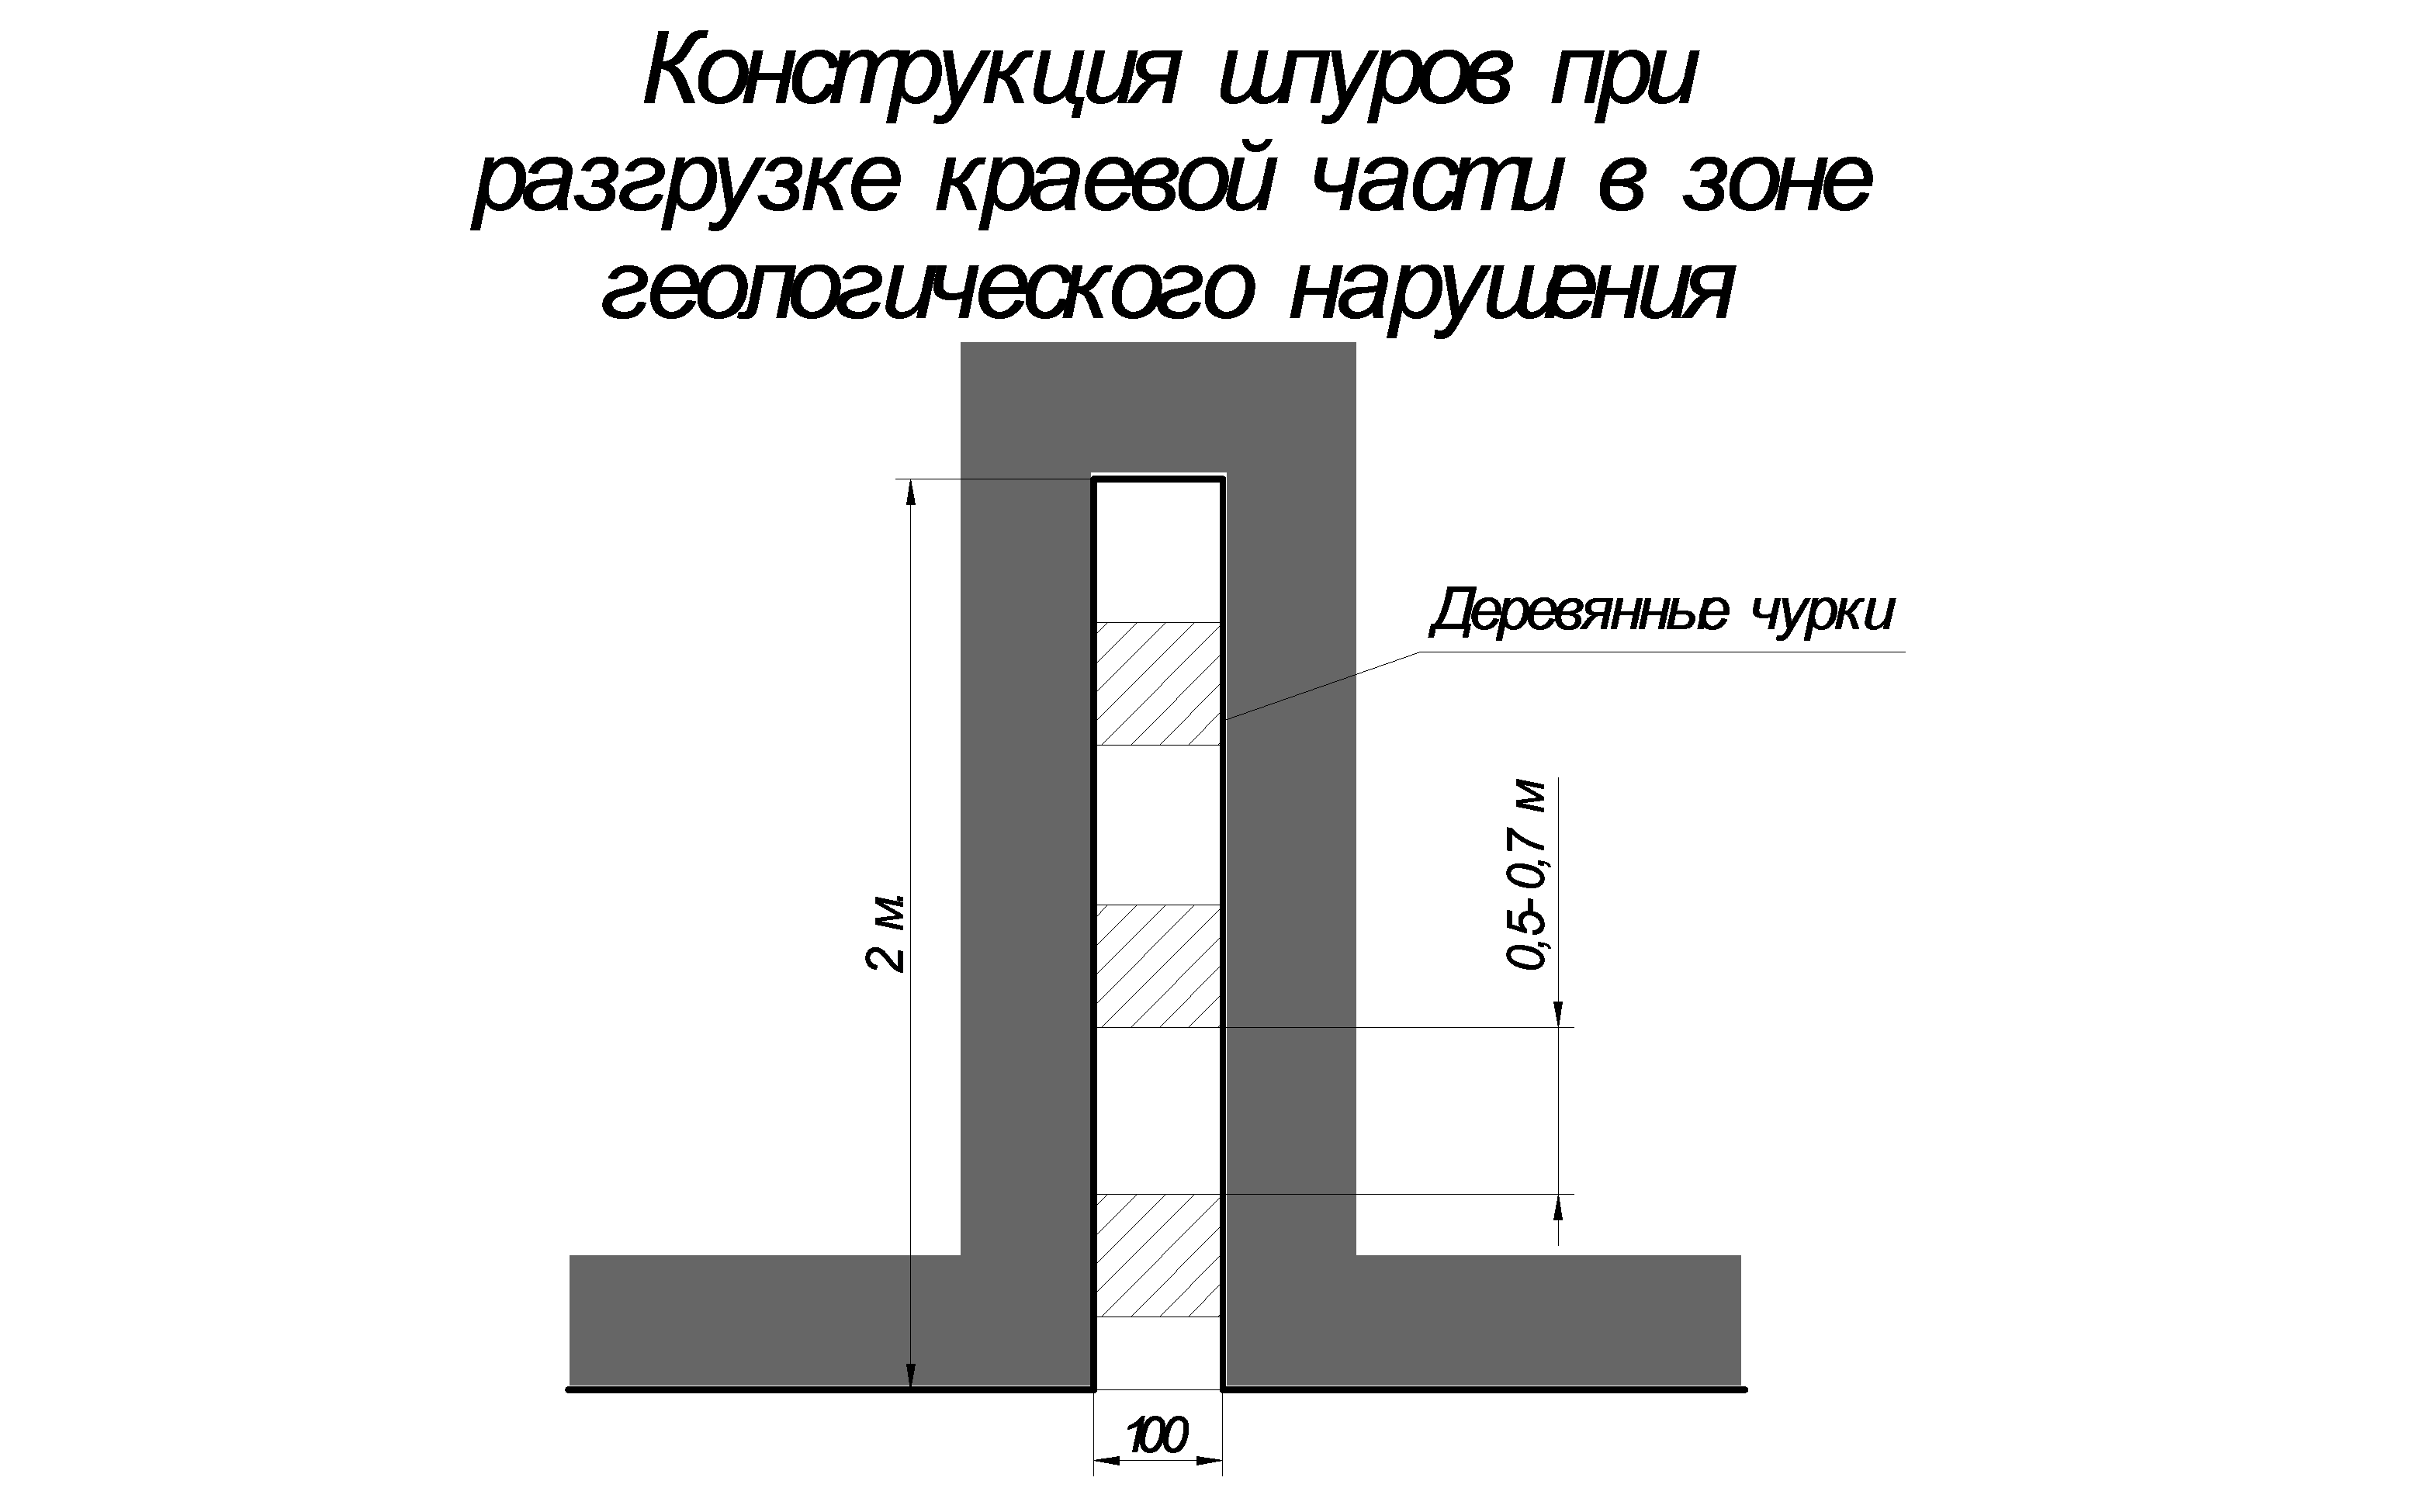 Разгрузка краевой части целика в зоне геологического нарушения пласта - student2.ru